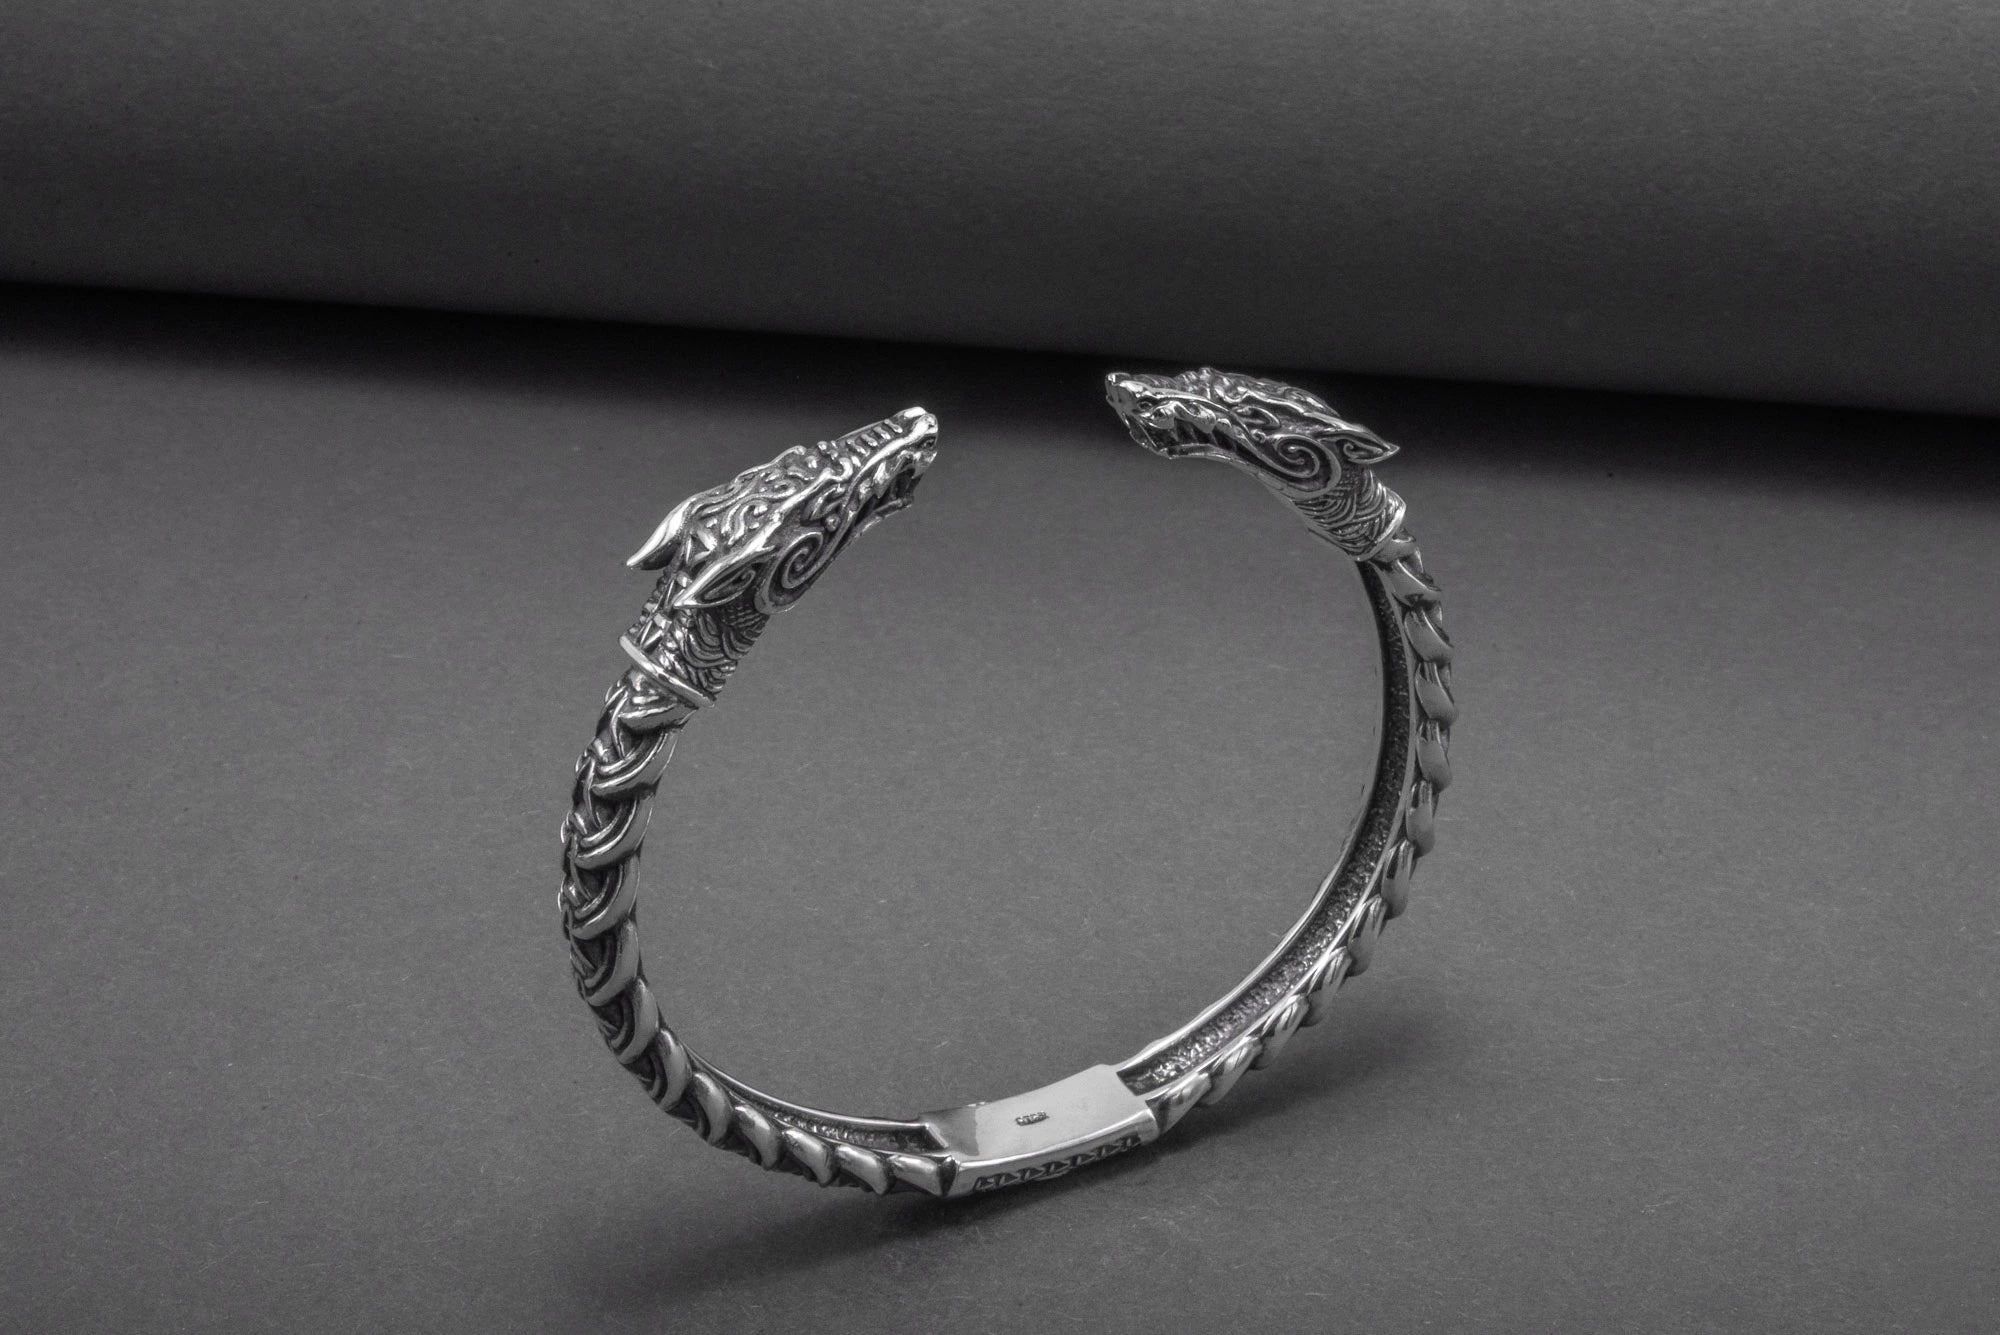 Stylish handcrafted bracelets with unique details